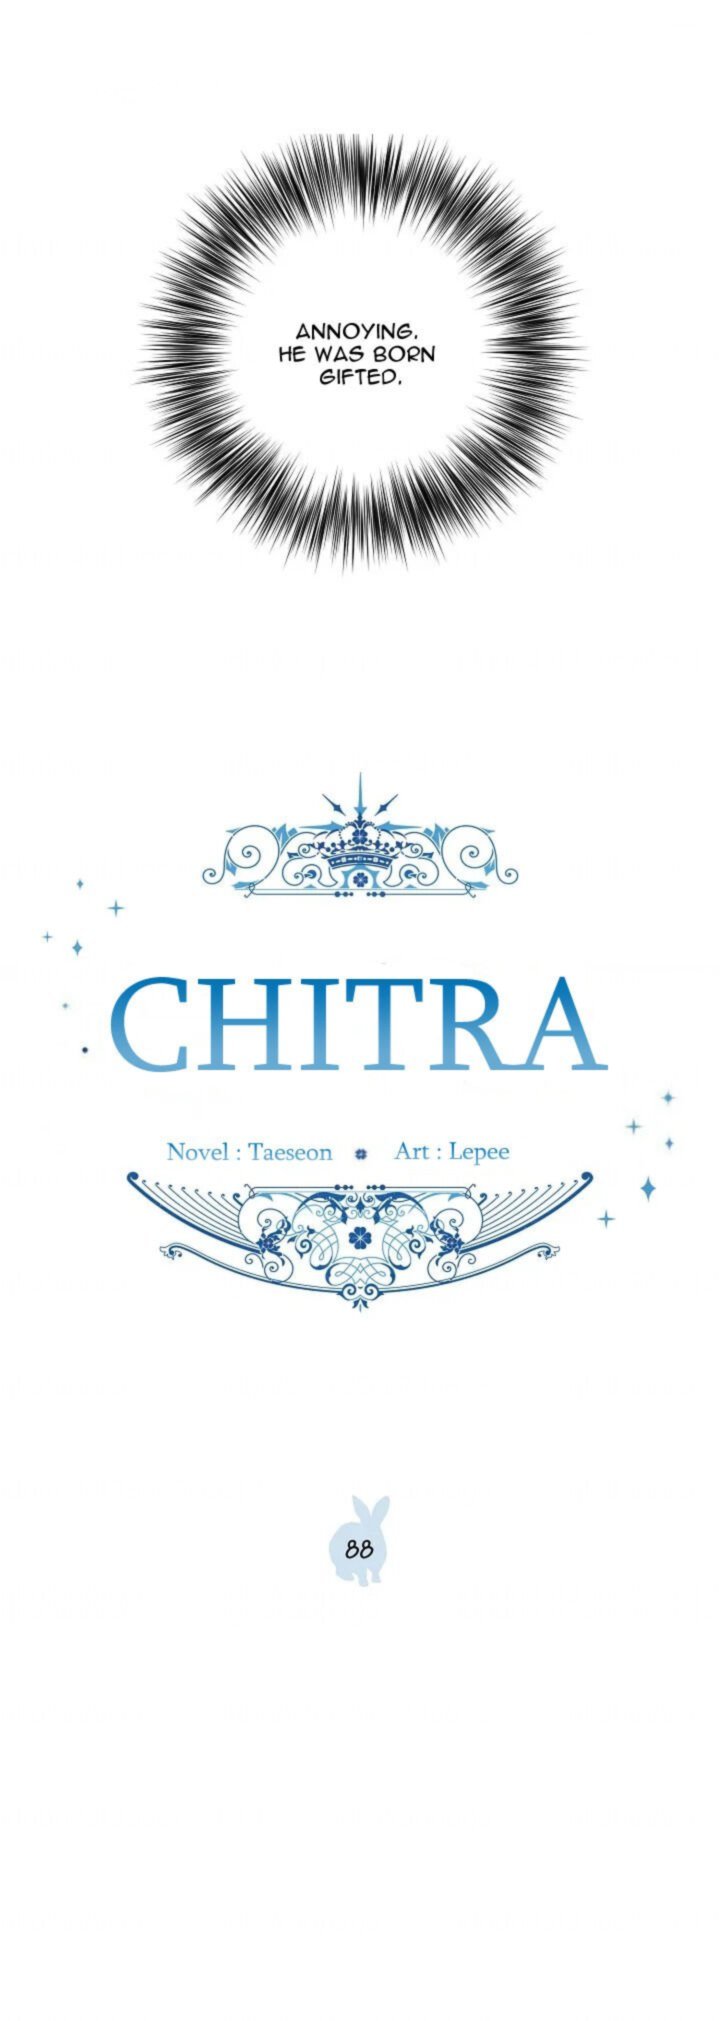 chitra_88_6